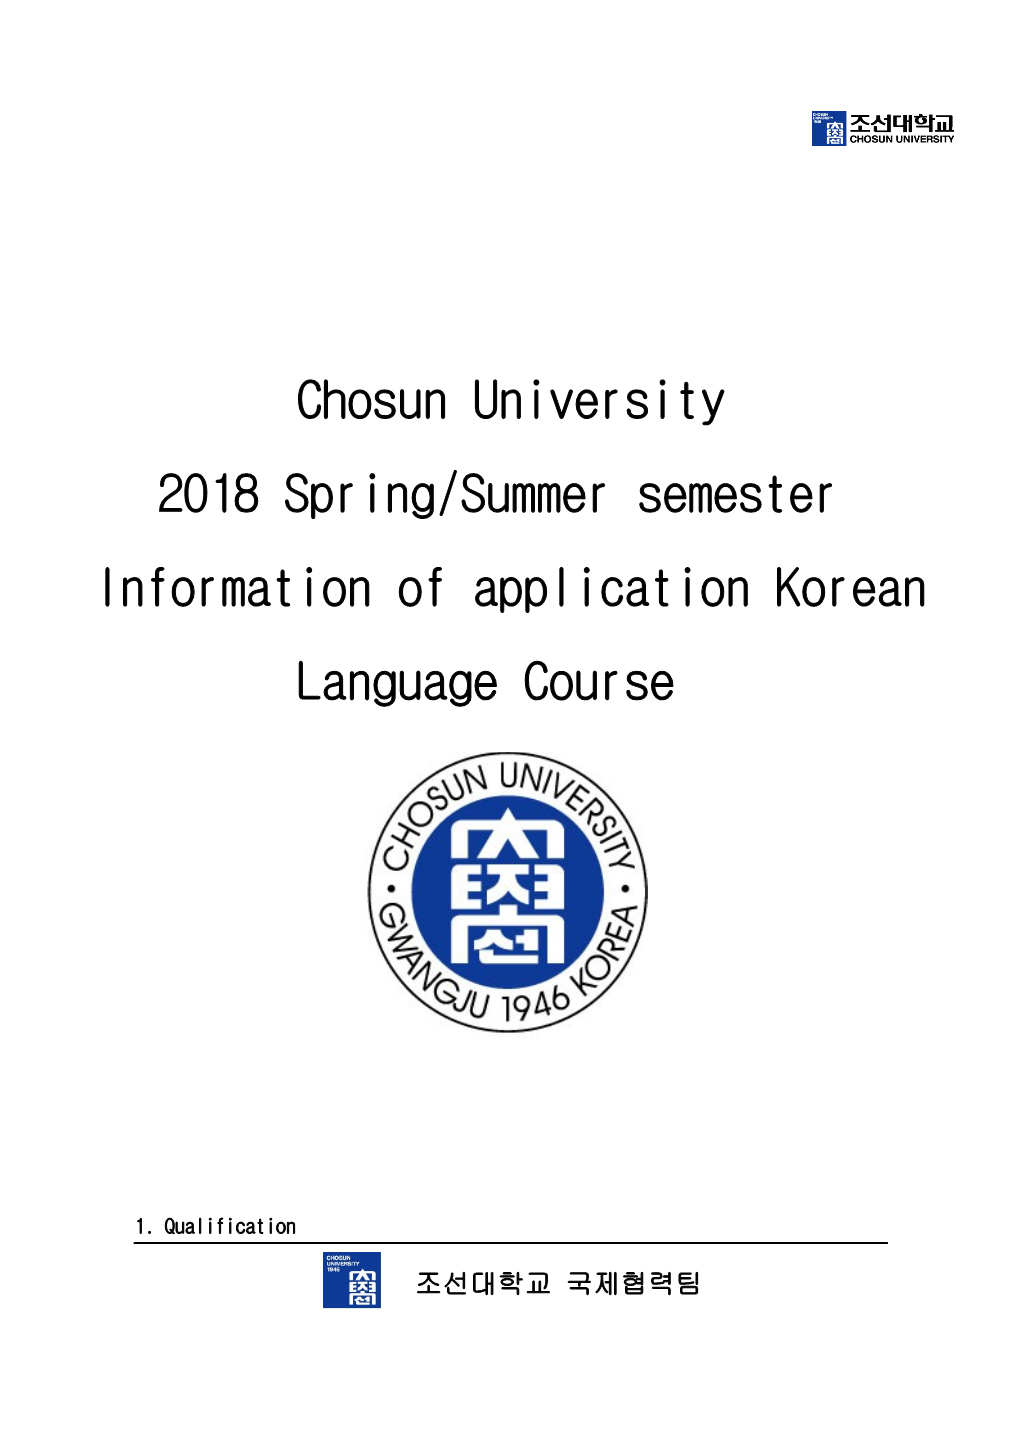 Information of Application Korean Language Course